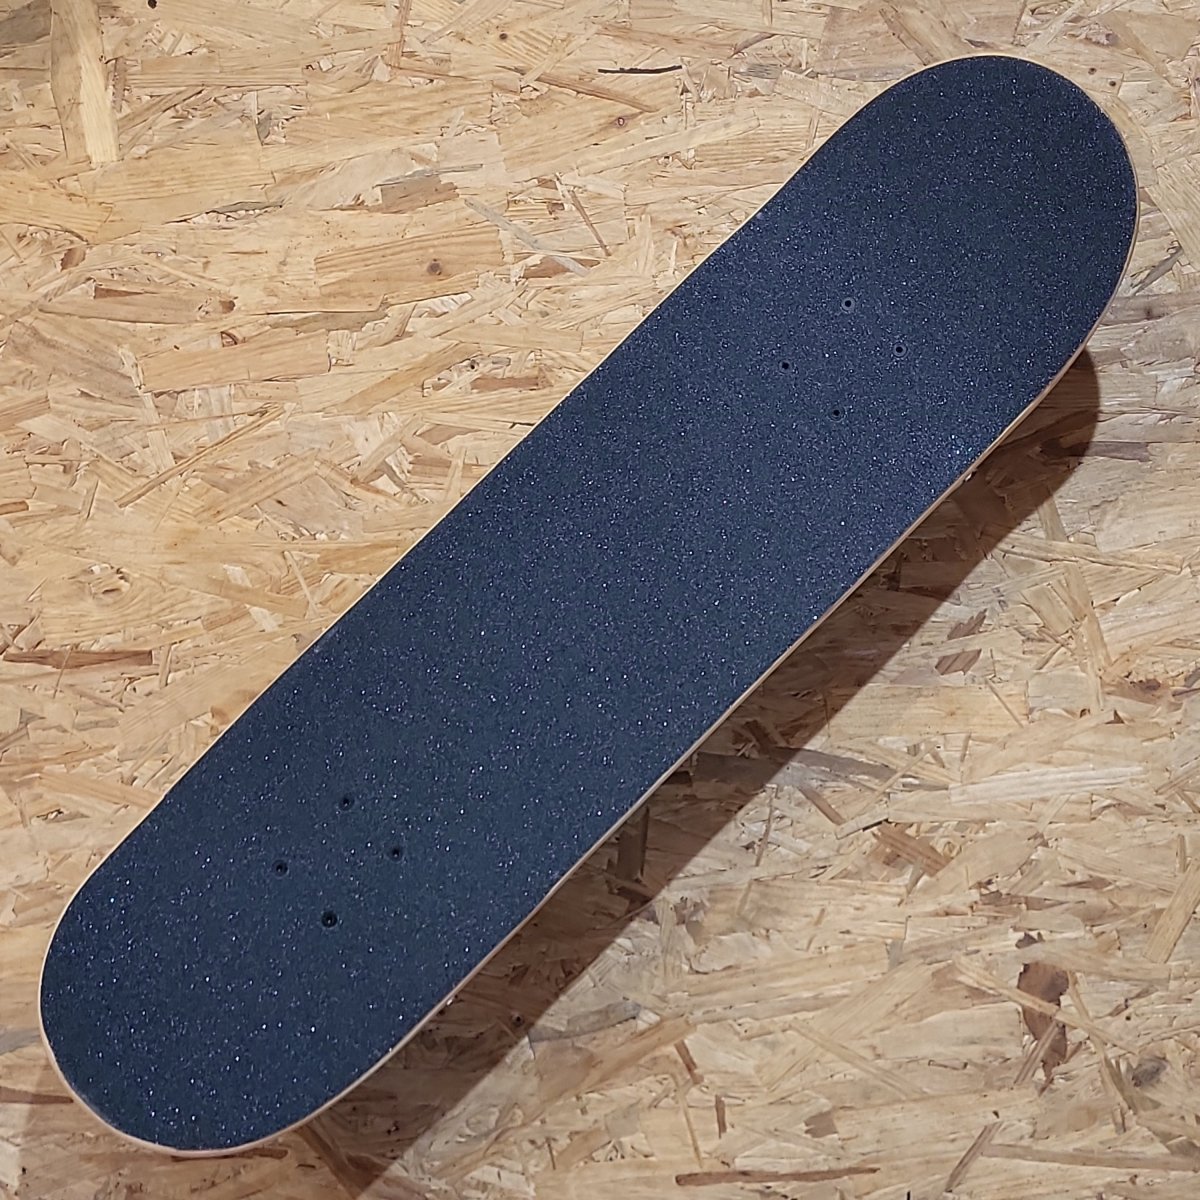 Plan B Complete Skateboard 8.0 Team - Skateboards - Rollbrett Mission